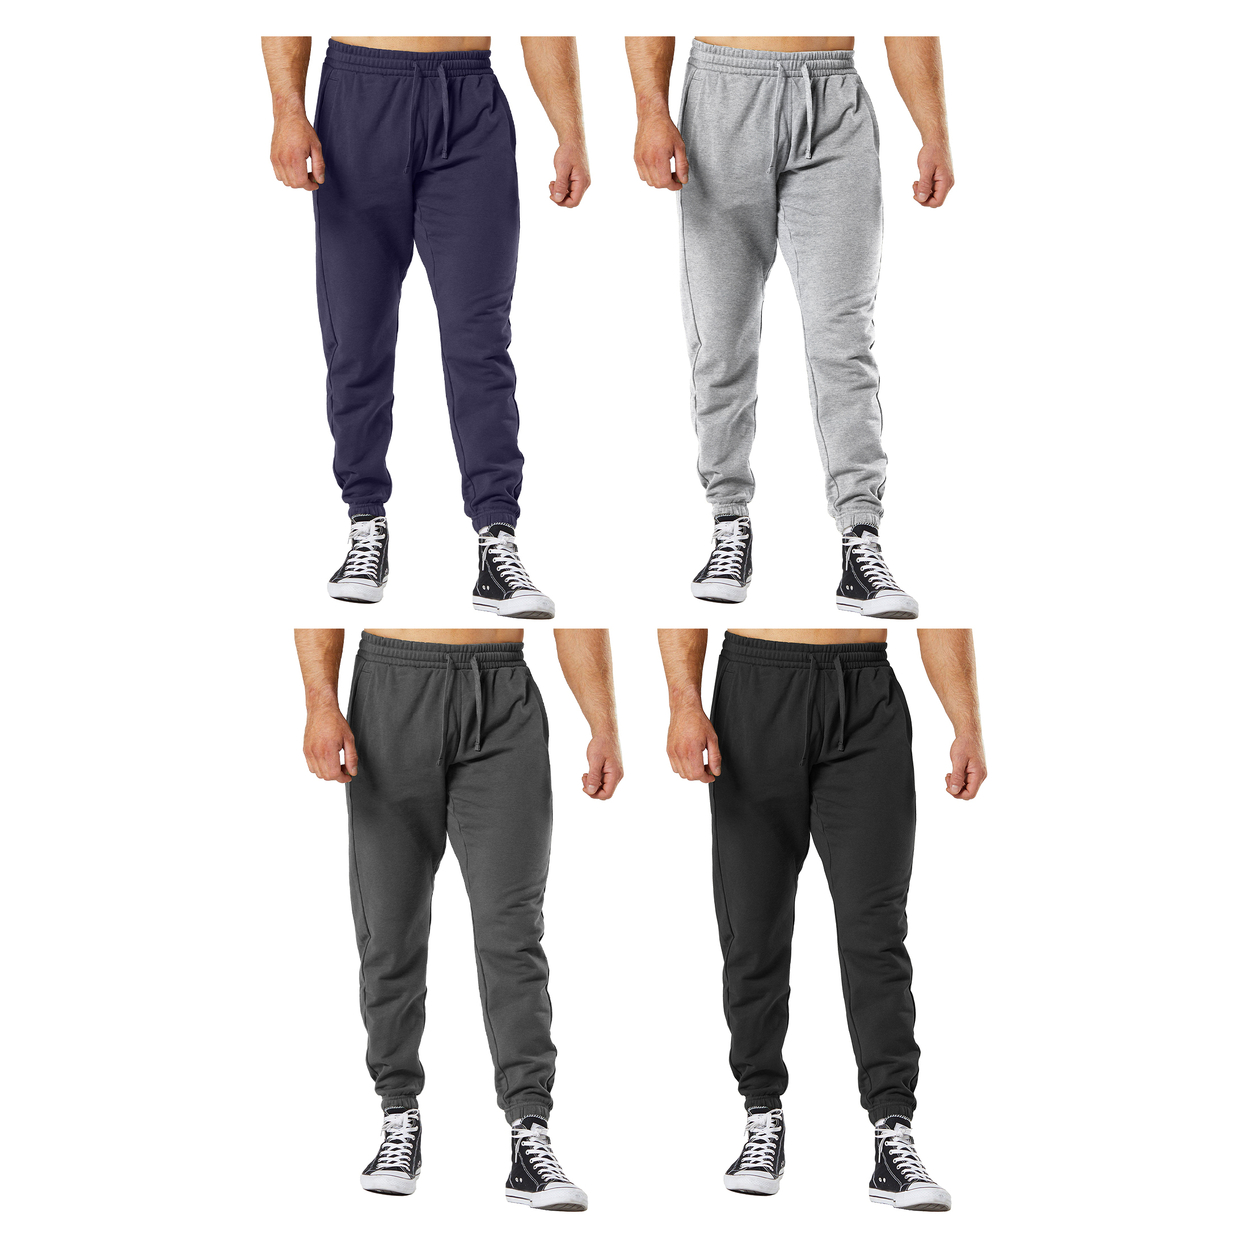 2-Pack: Men's Ultra-Soft Cozy Winter Warm Casual Fleece-Lined Sweatpants Jogger - Black & Black, Xx-large